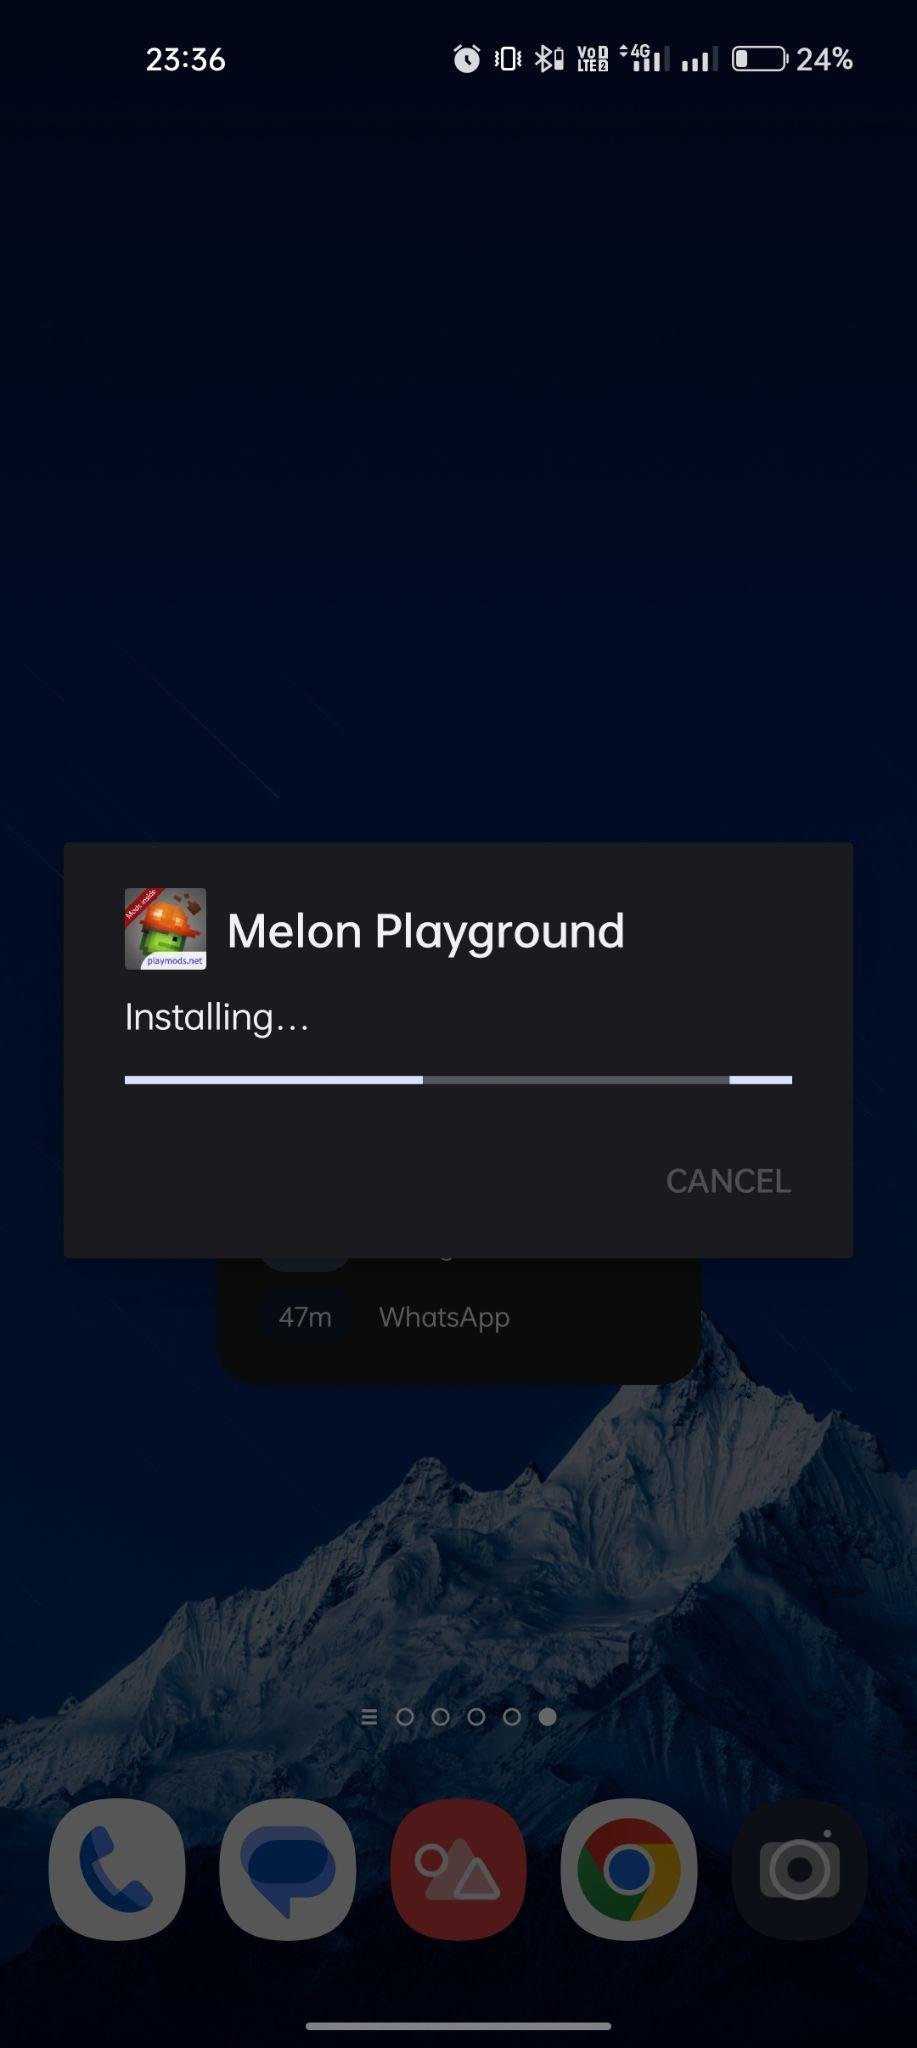 Melon Playground apk installing